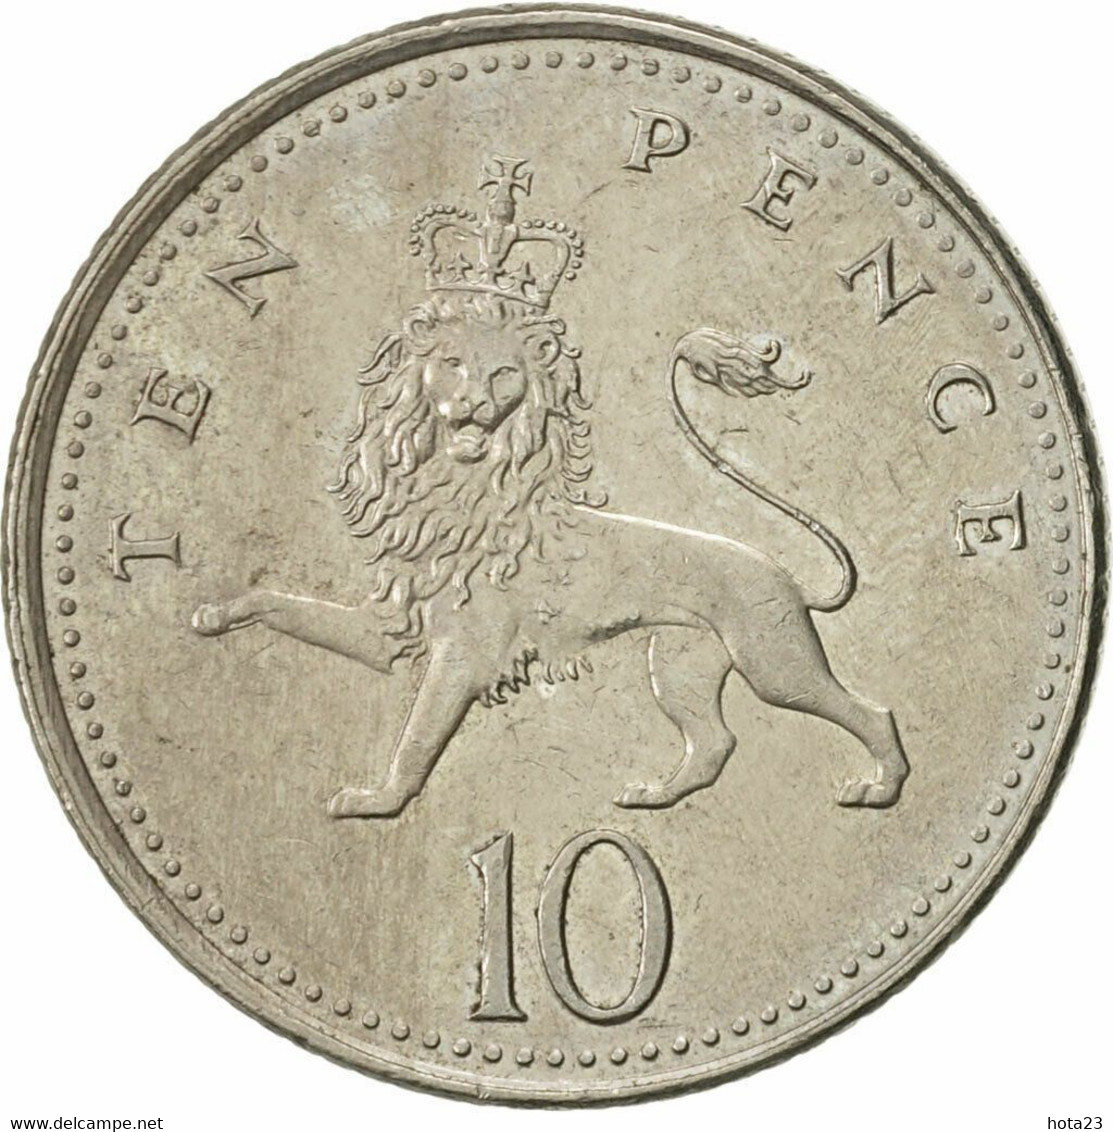 Coin, UK, Elizabeth II, 10 Pence, 2000 Year, Copper Nickel - 10 Pence & 10 New Pence